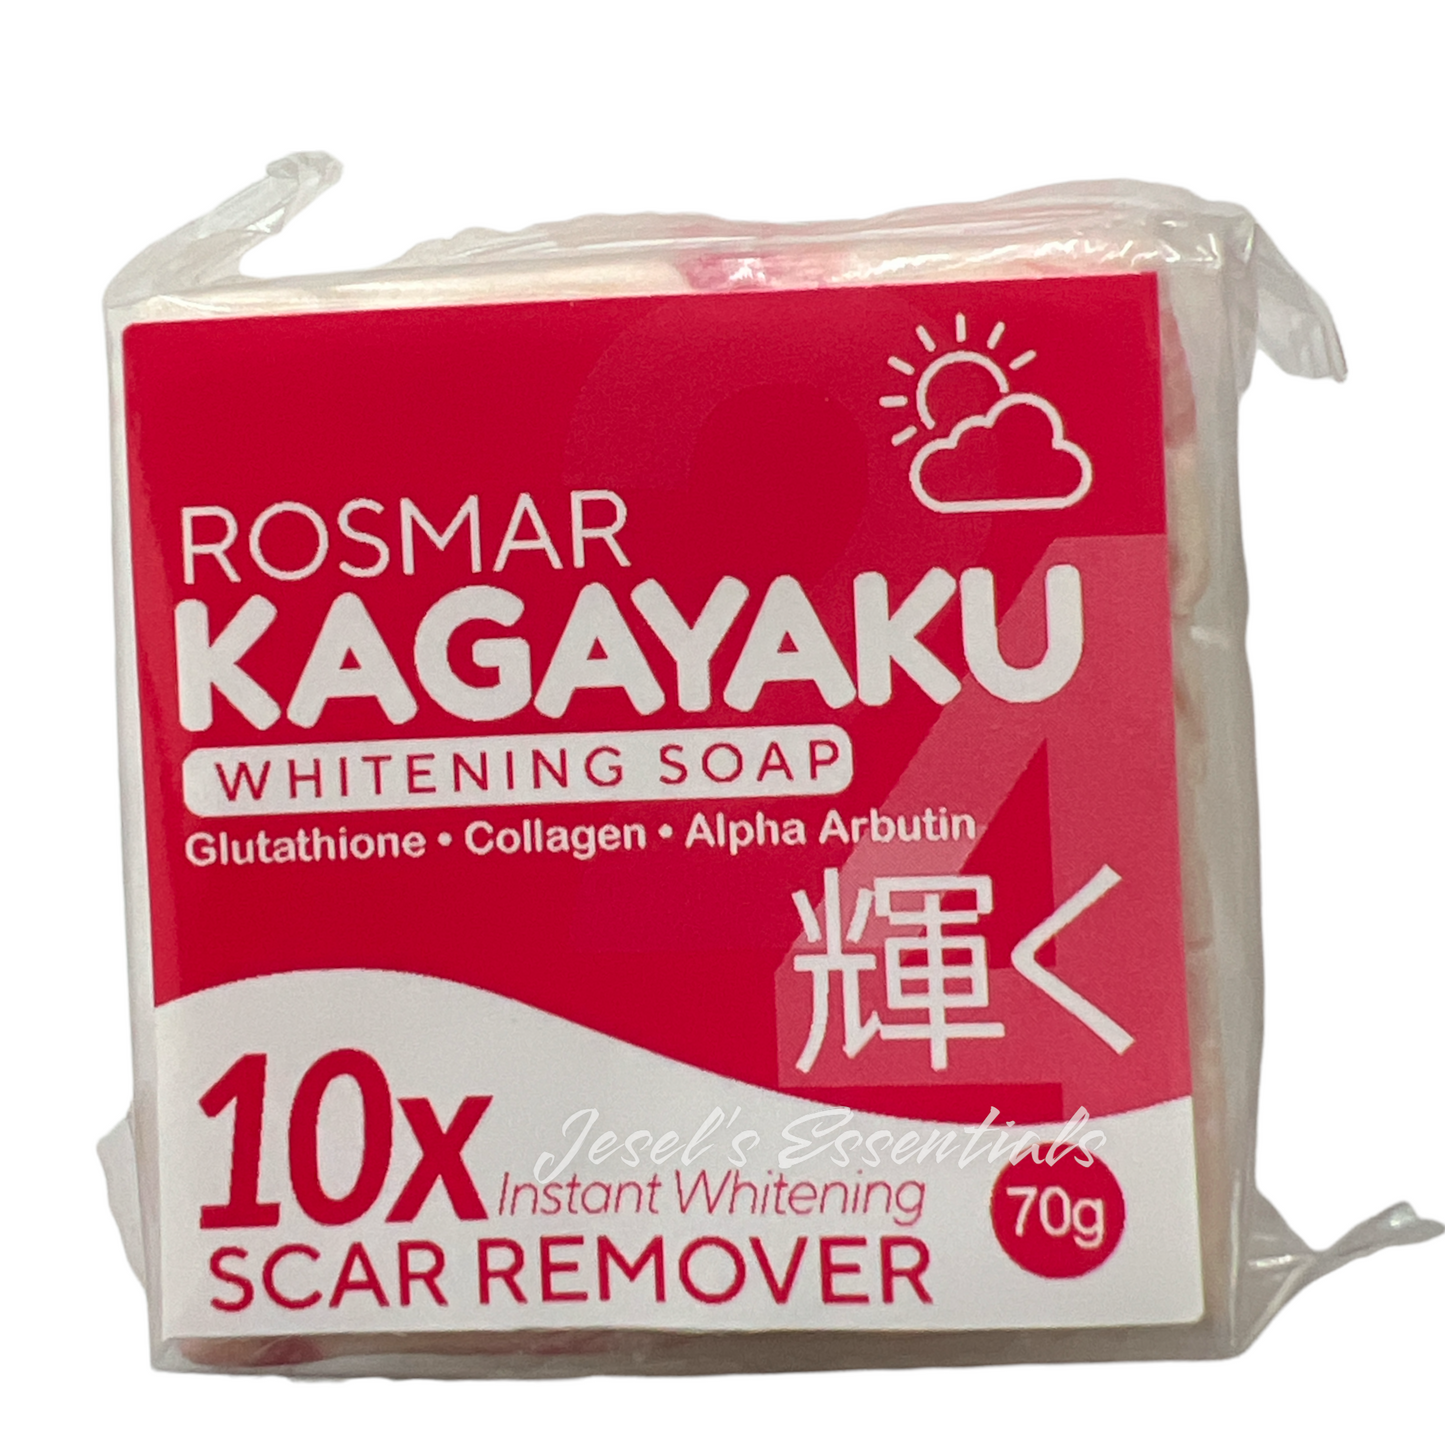 Rosmar Kagayaku Condensada Whitening Soap